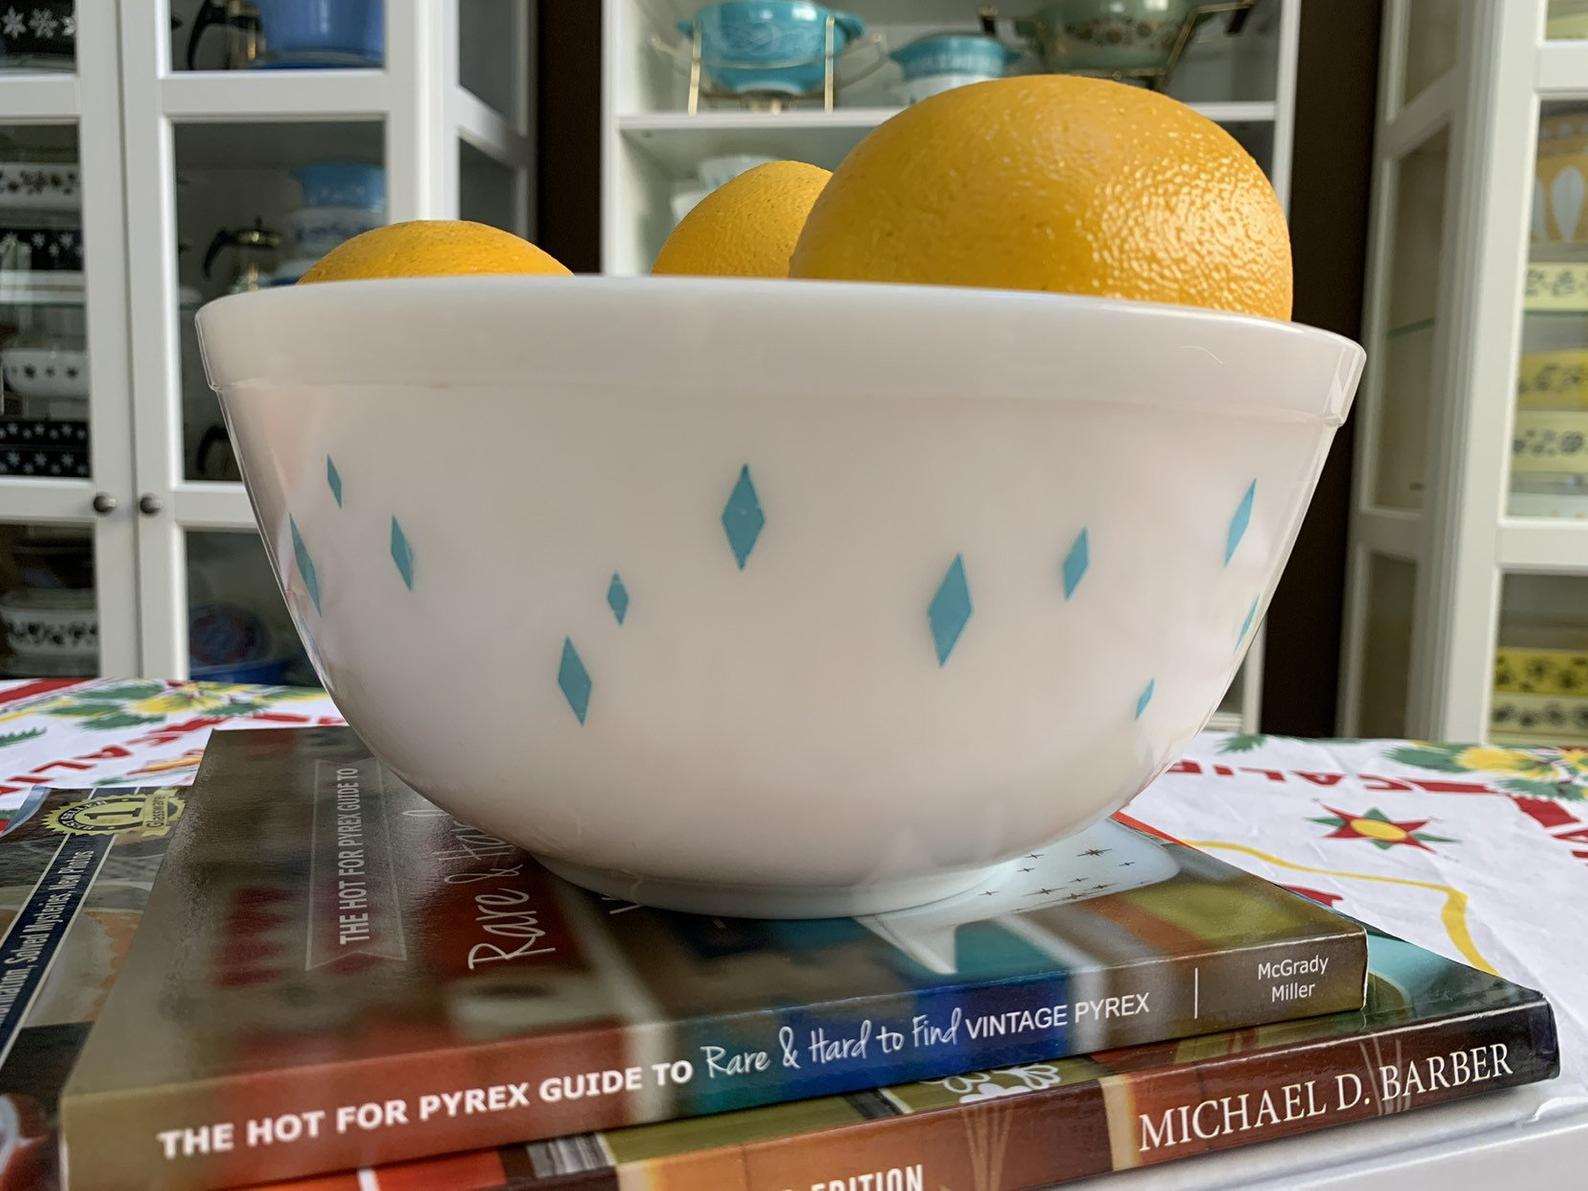 Pyrex vintage bowls